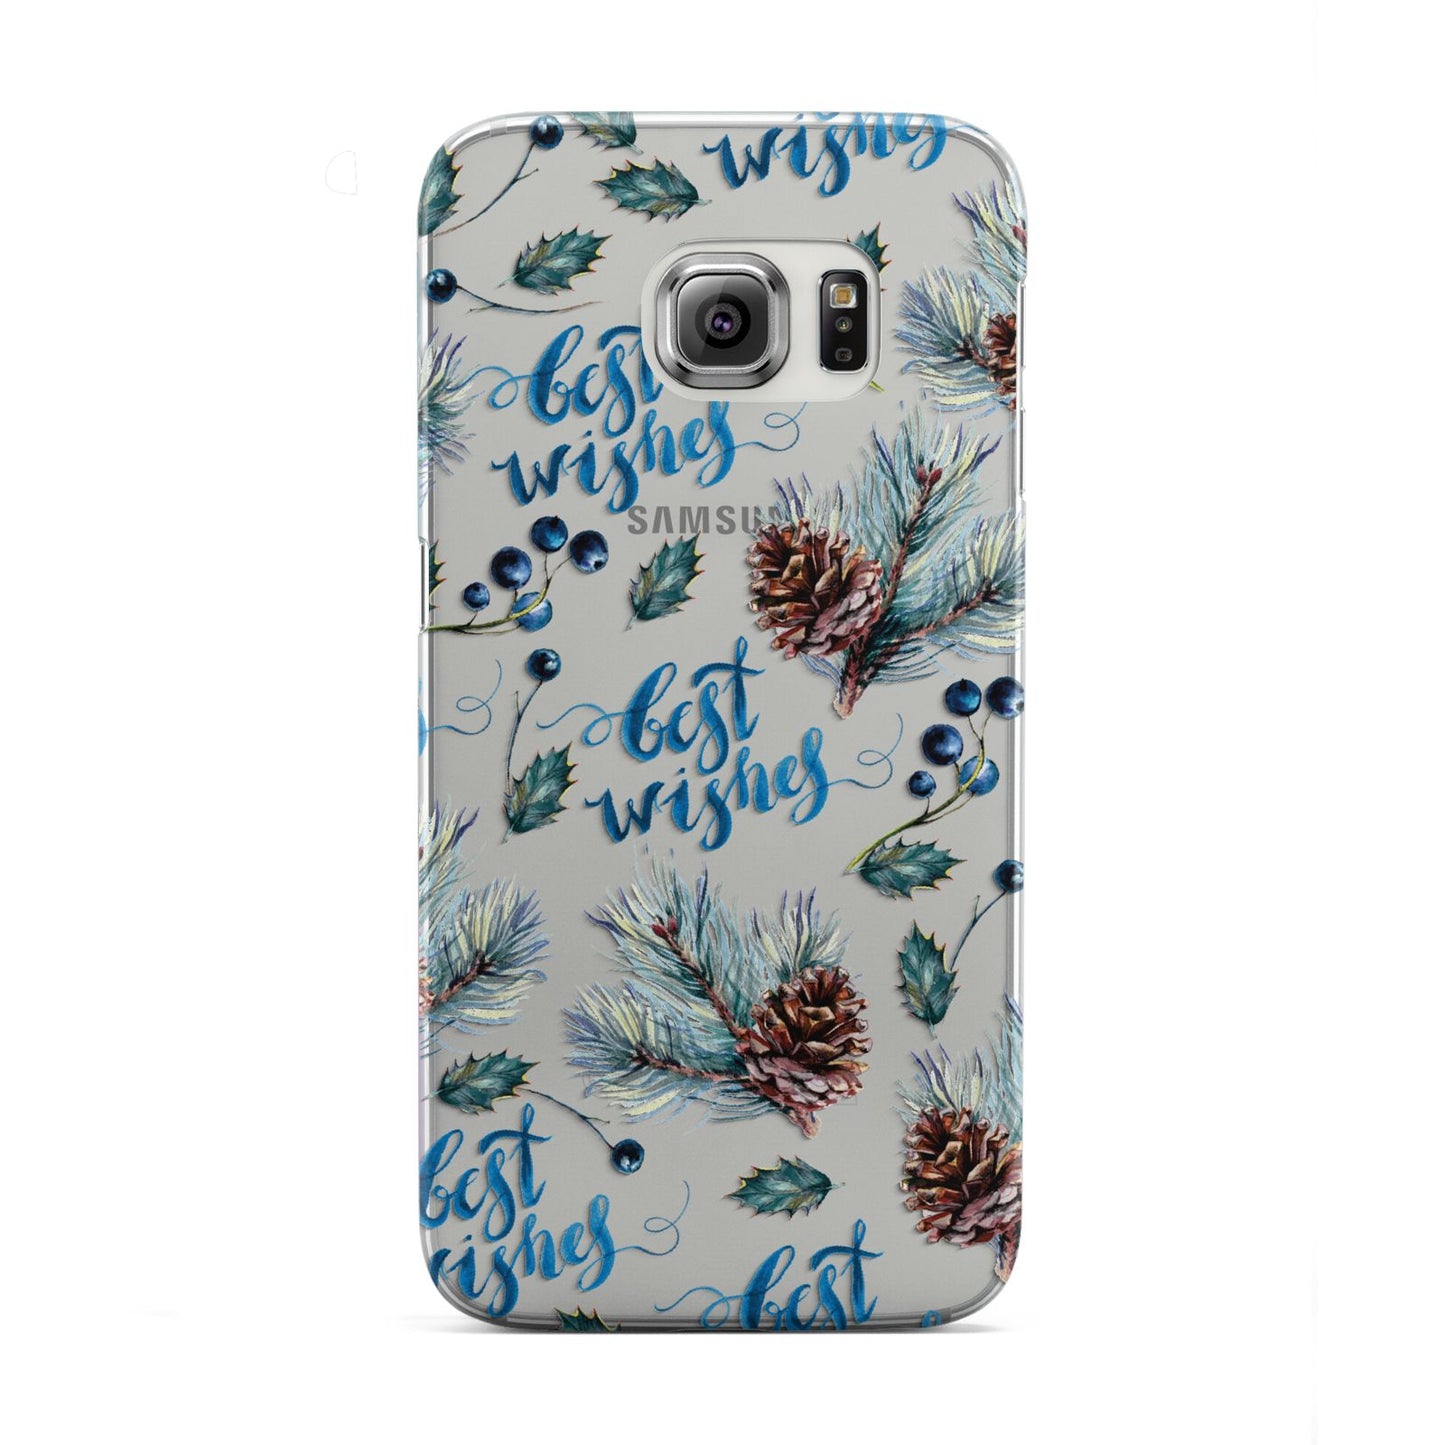 Pine cones wild berries Samsung Galaxy S6 Edge Case